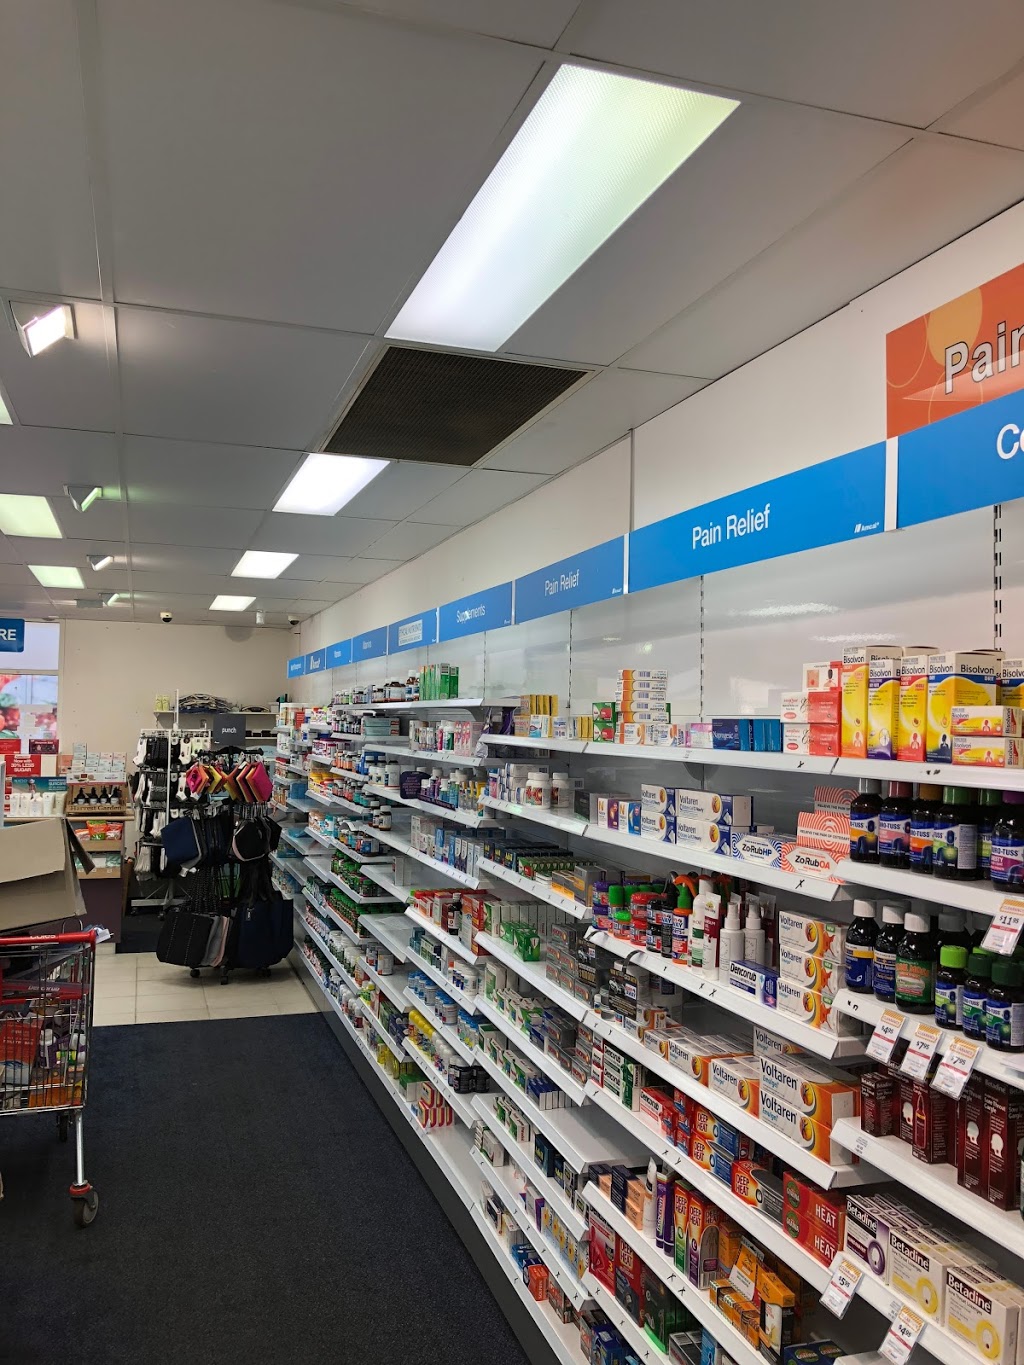 West Gosford Amcal+ Pharmacy | pharmacy | 299 Brisbane Water Dr, West Gosford NSW 2250, Australia | 0243252866 OR +61 2 4325 2866